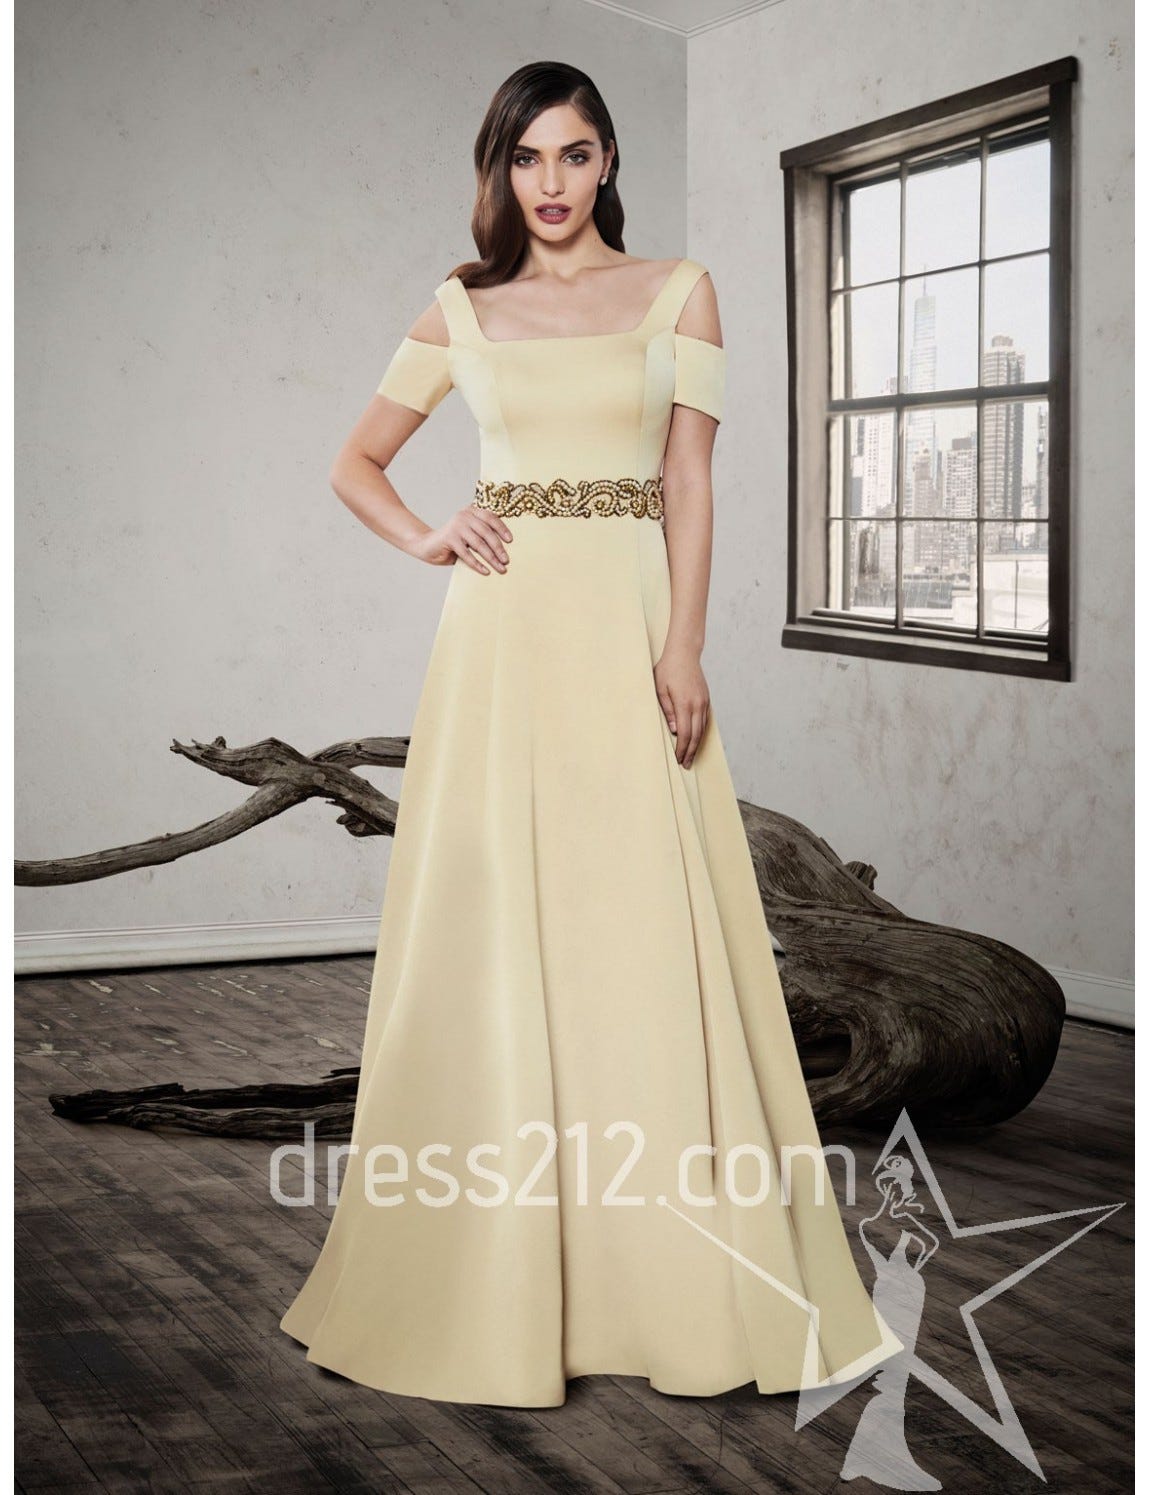 Buy Online Celebrity Dresses. #celebrity #dresses #clothes #clothing… | by  Dress212 LLC | Medium